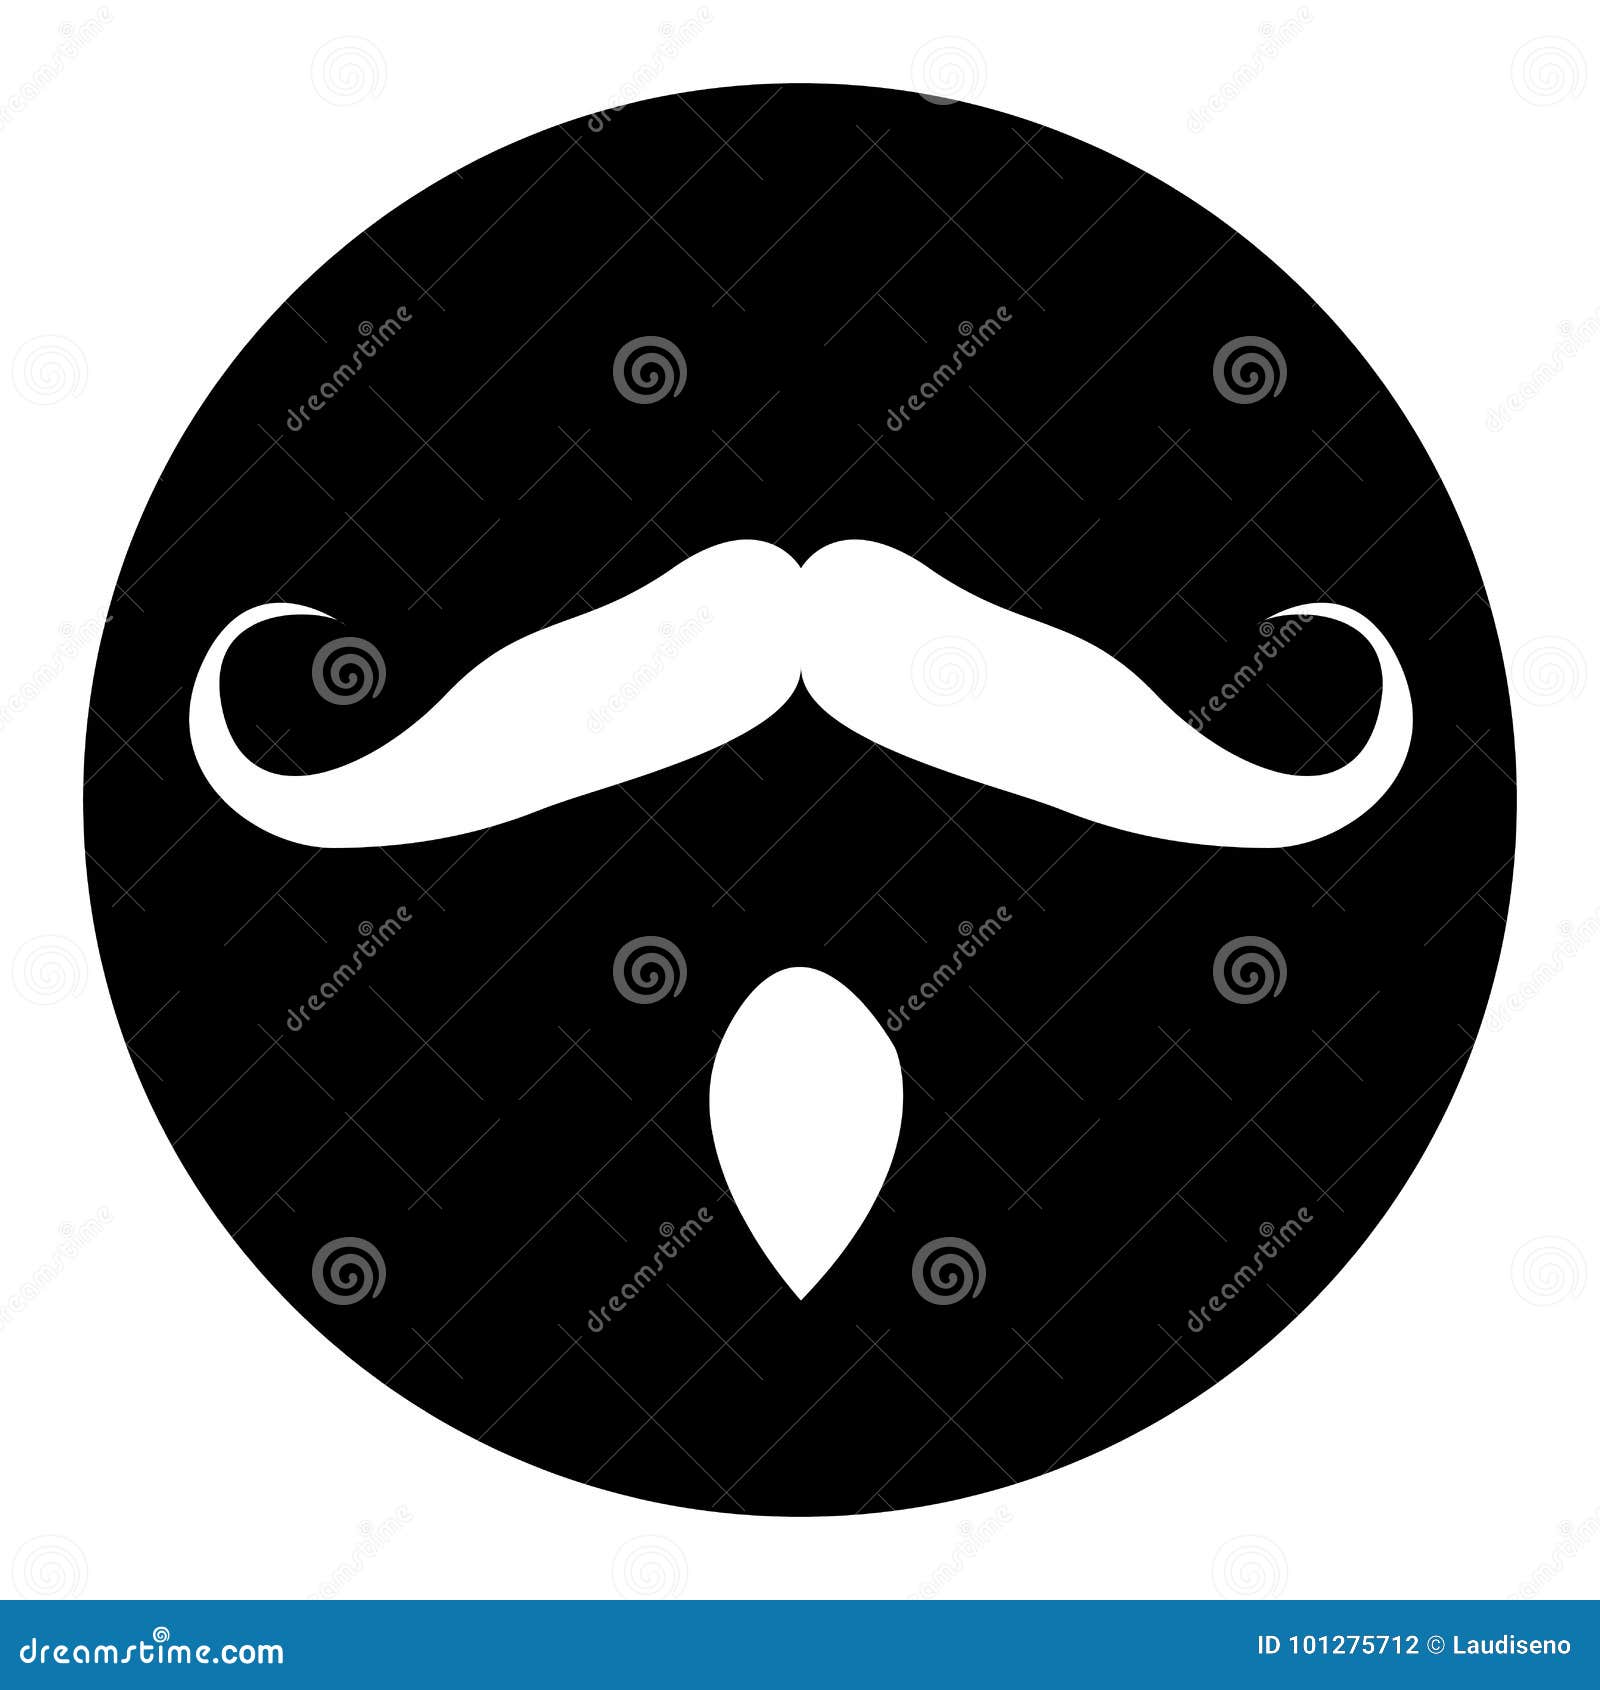 Isolated mustache icon stock illustration. Illustration of face - 101275712